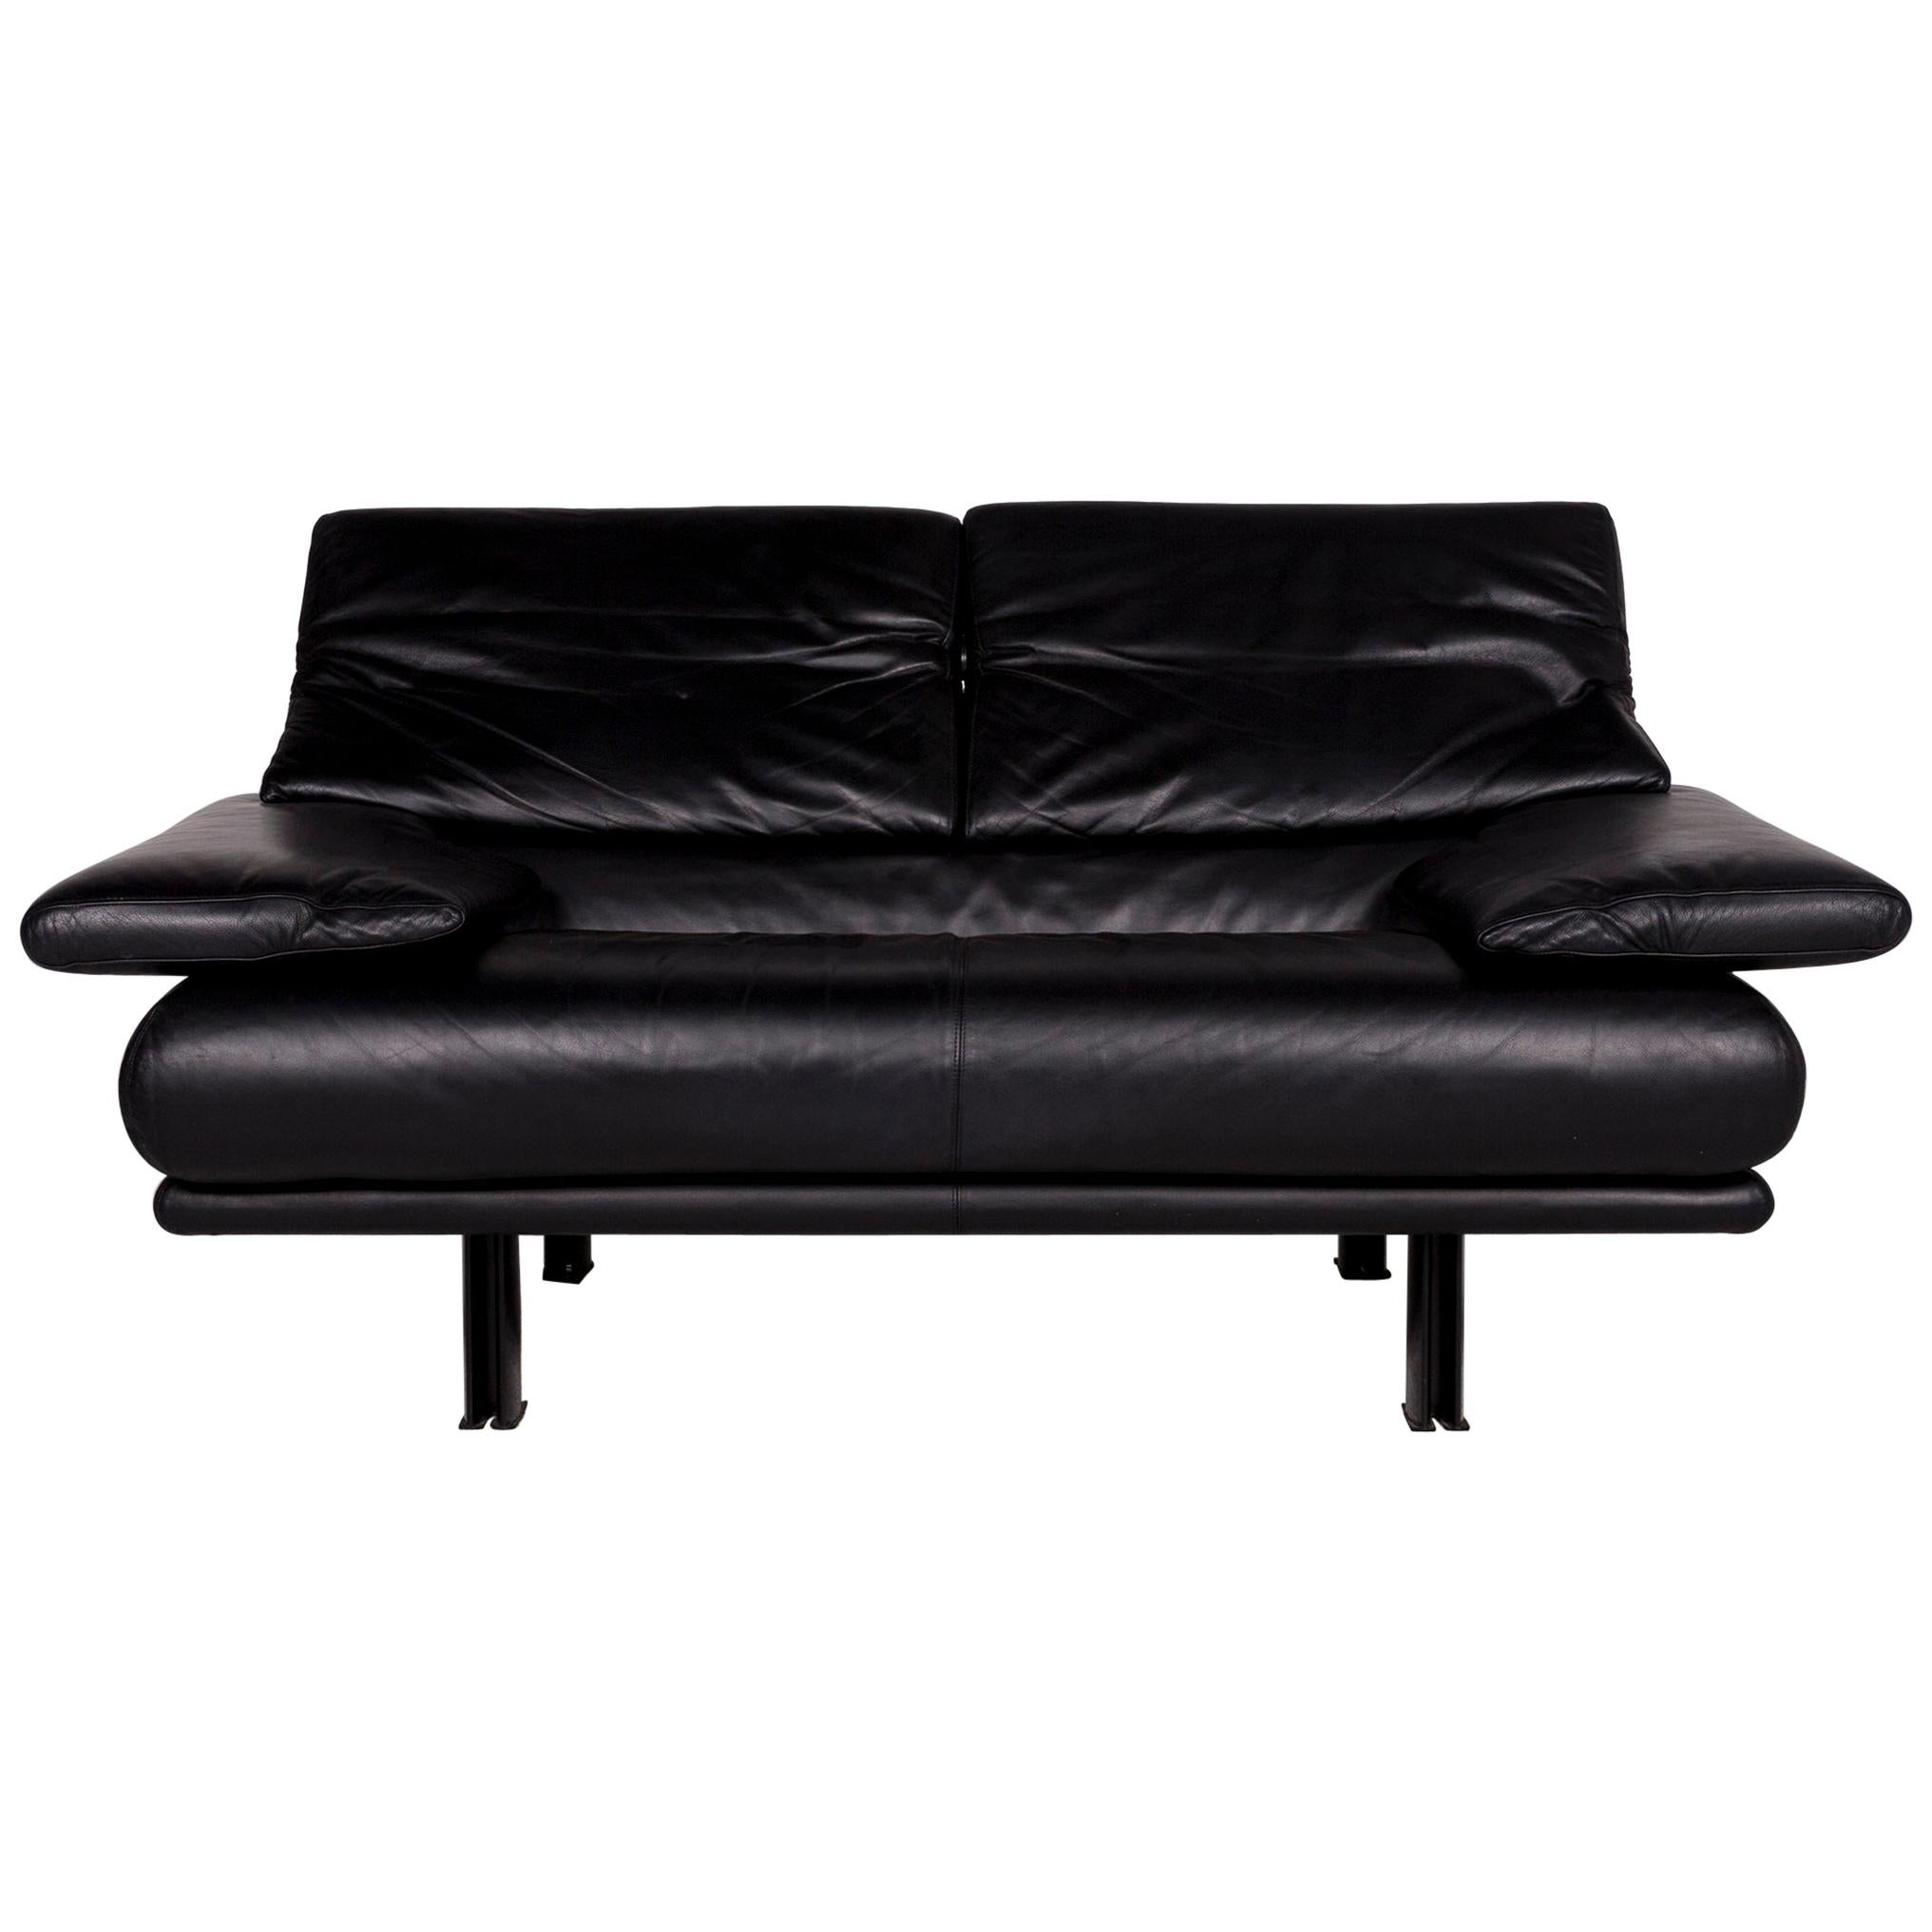 B & B Italia Alanda Leather Sofa Black Two-Seat Function Paolo Piva Couch